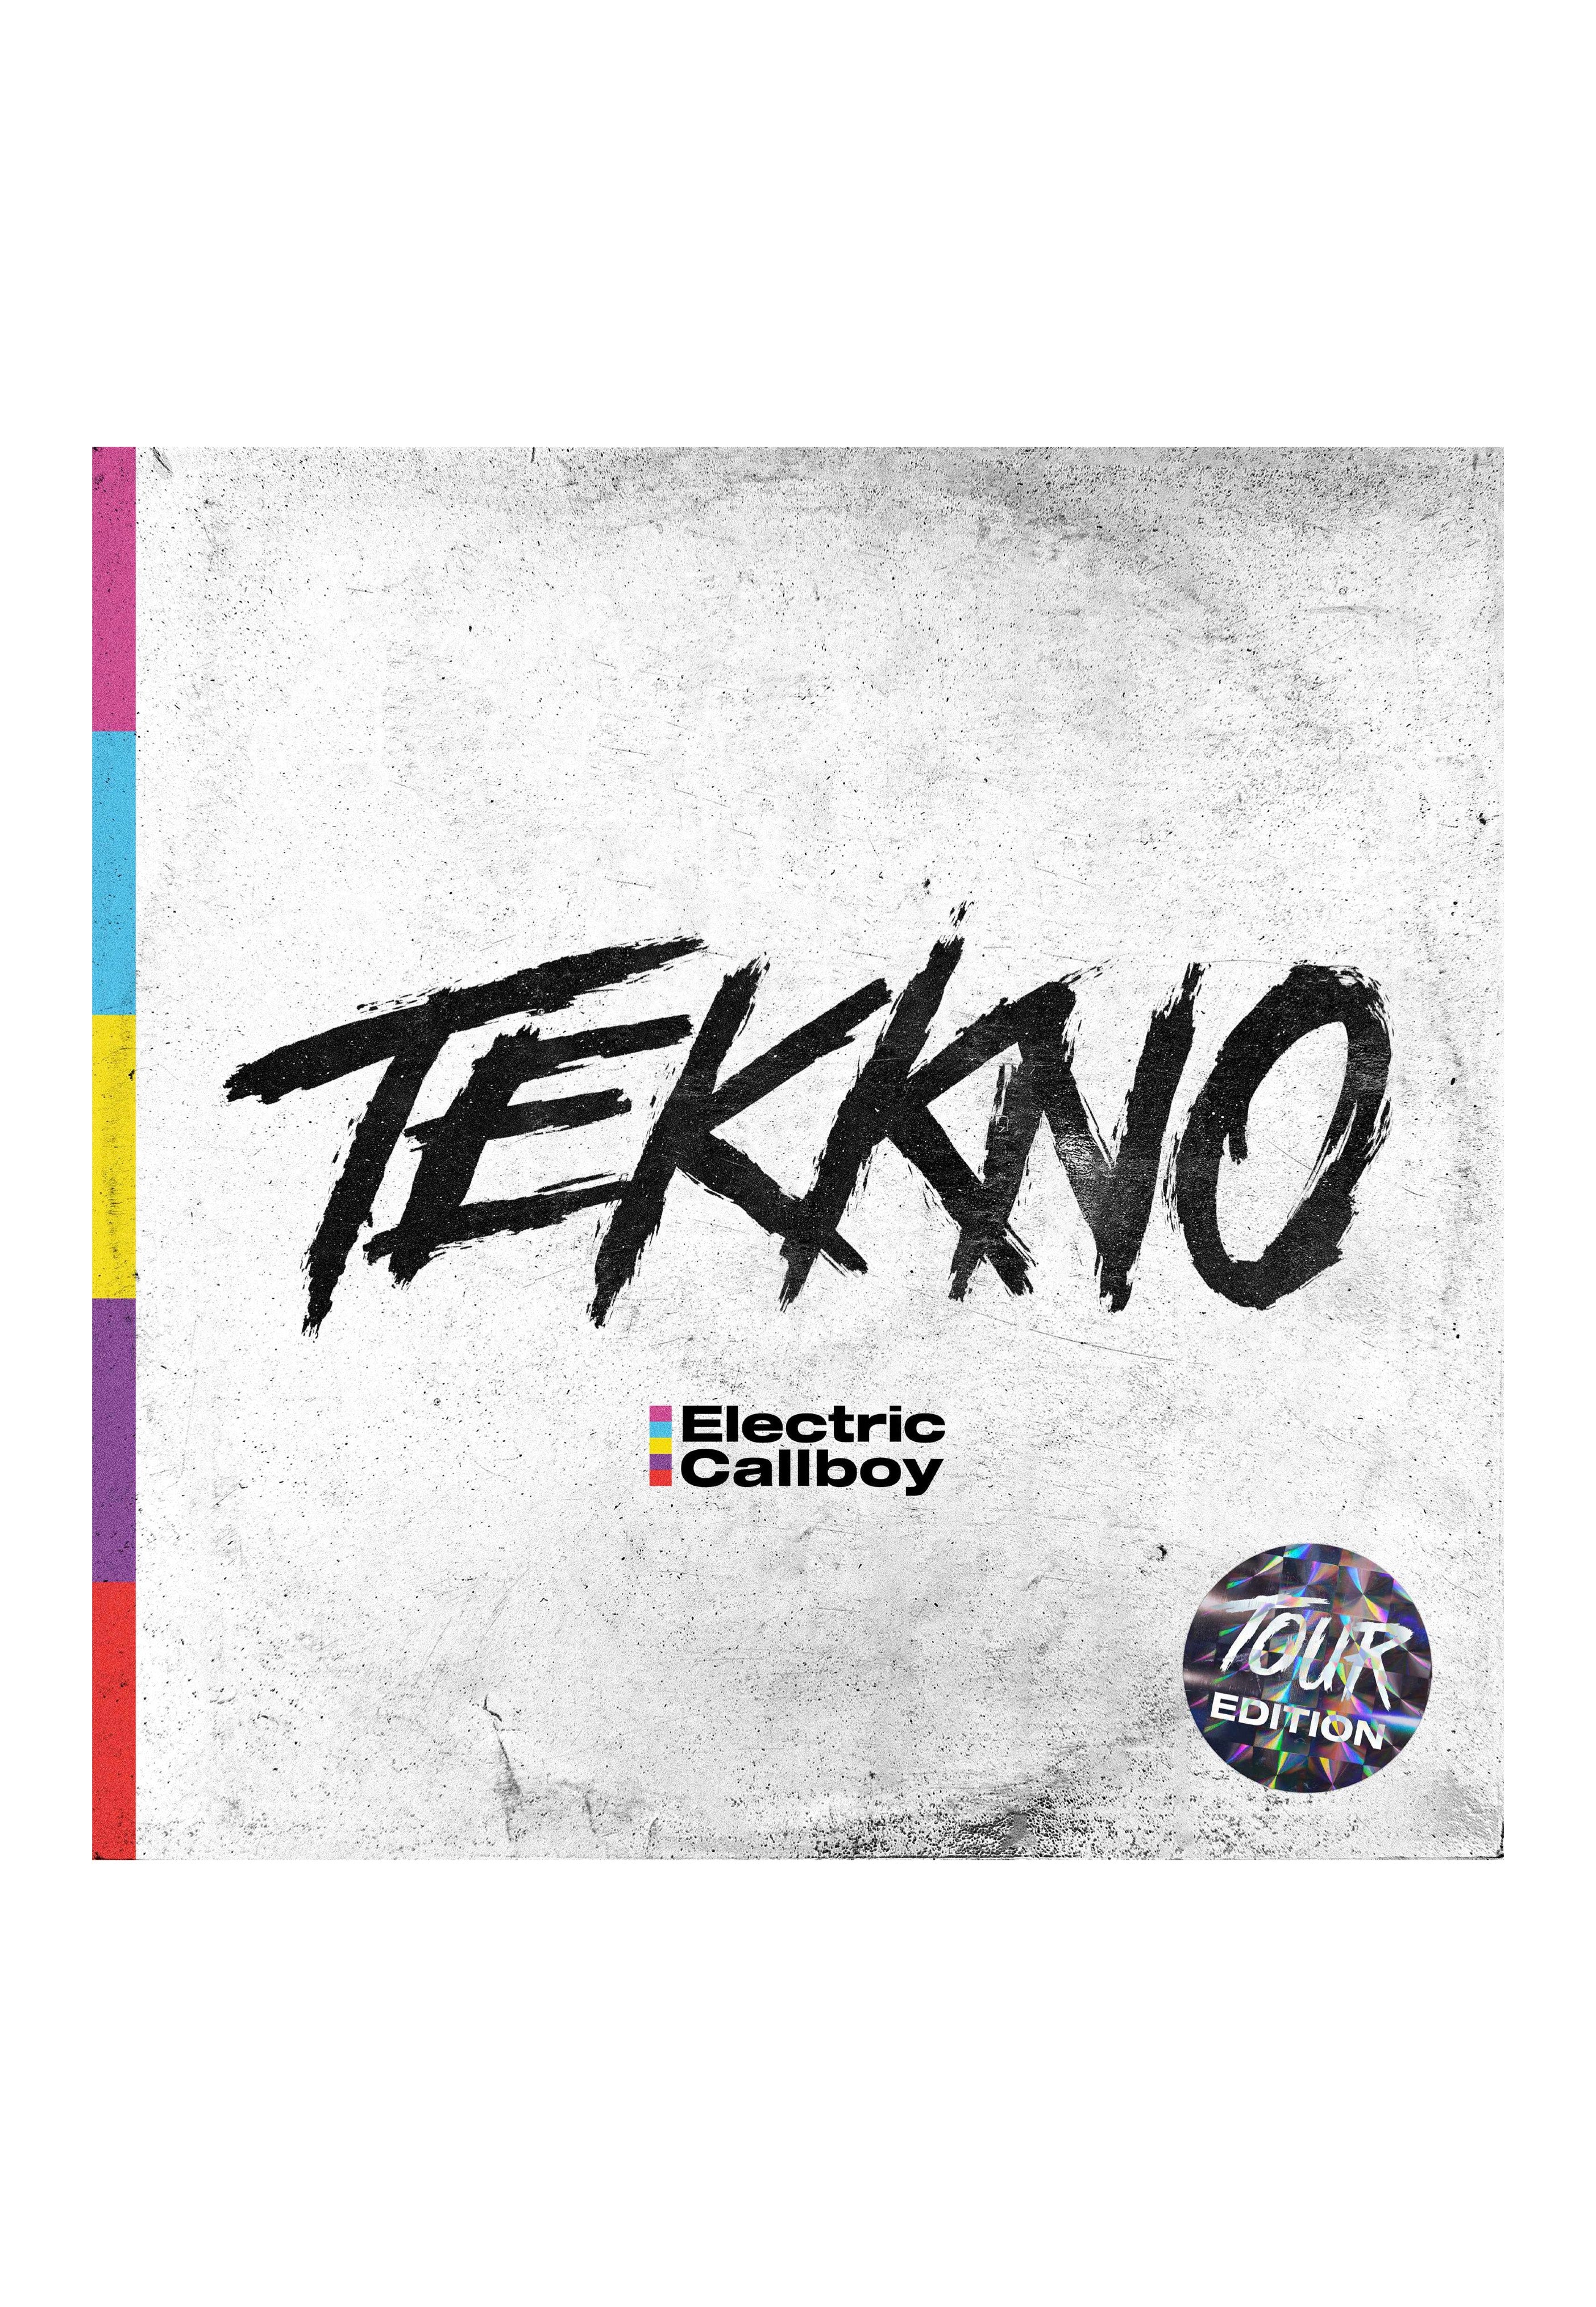 Electric Callboy - TEKKNO (Tour Edition) - CD